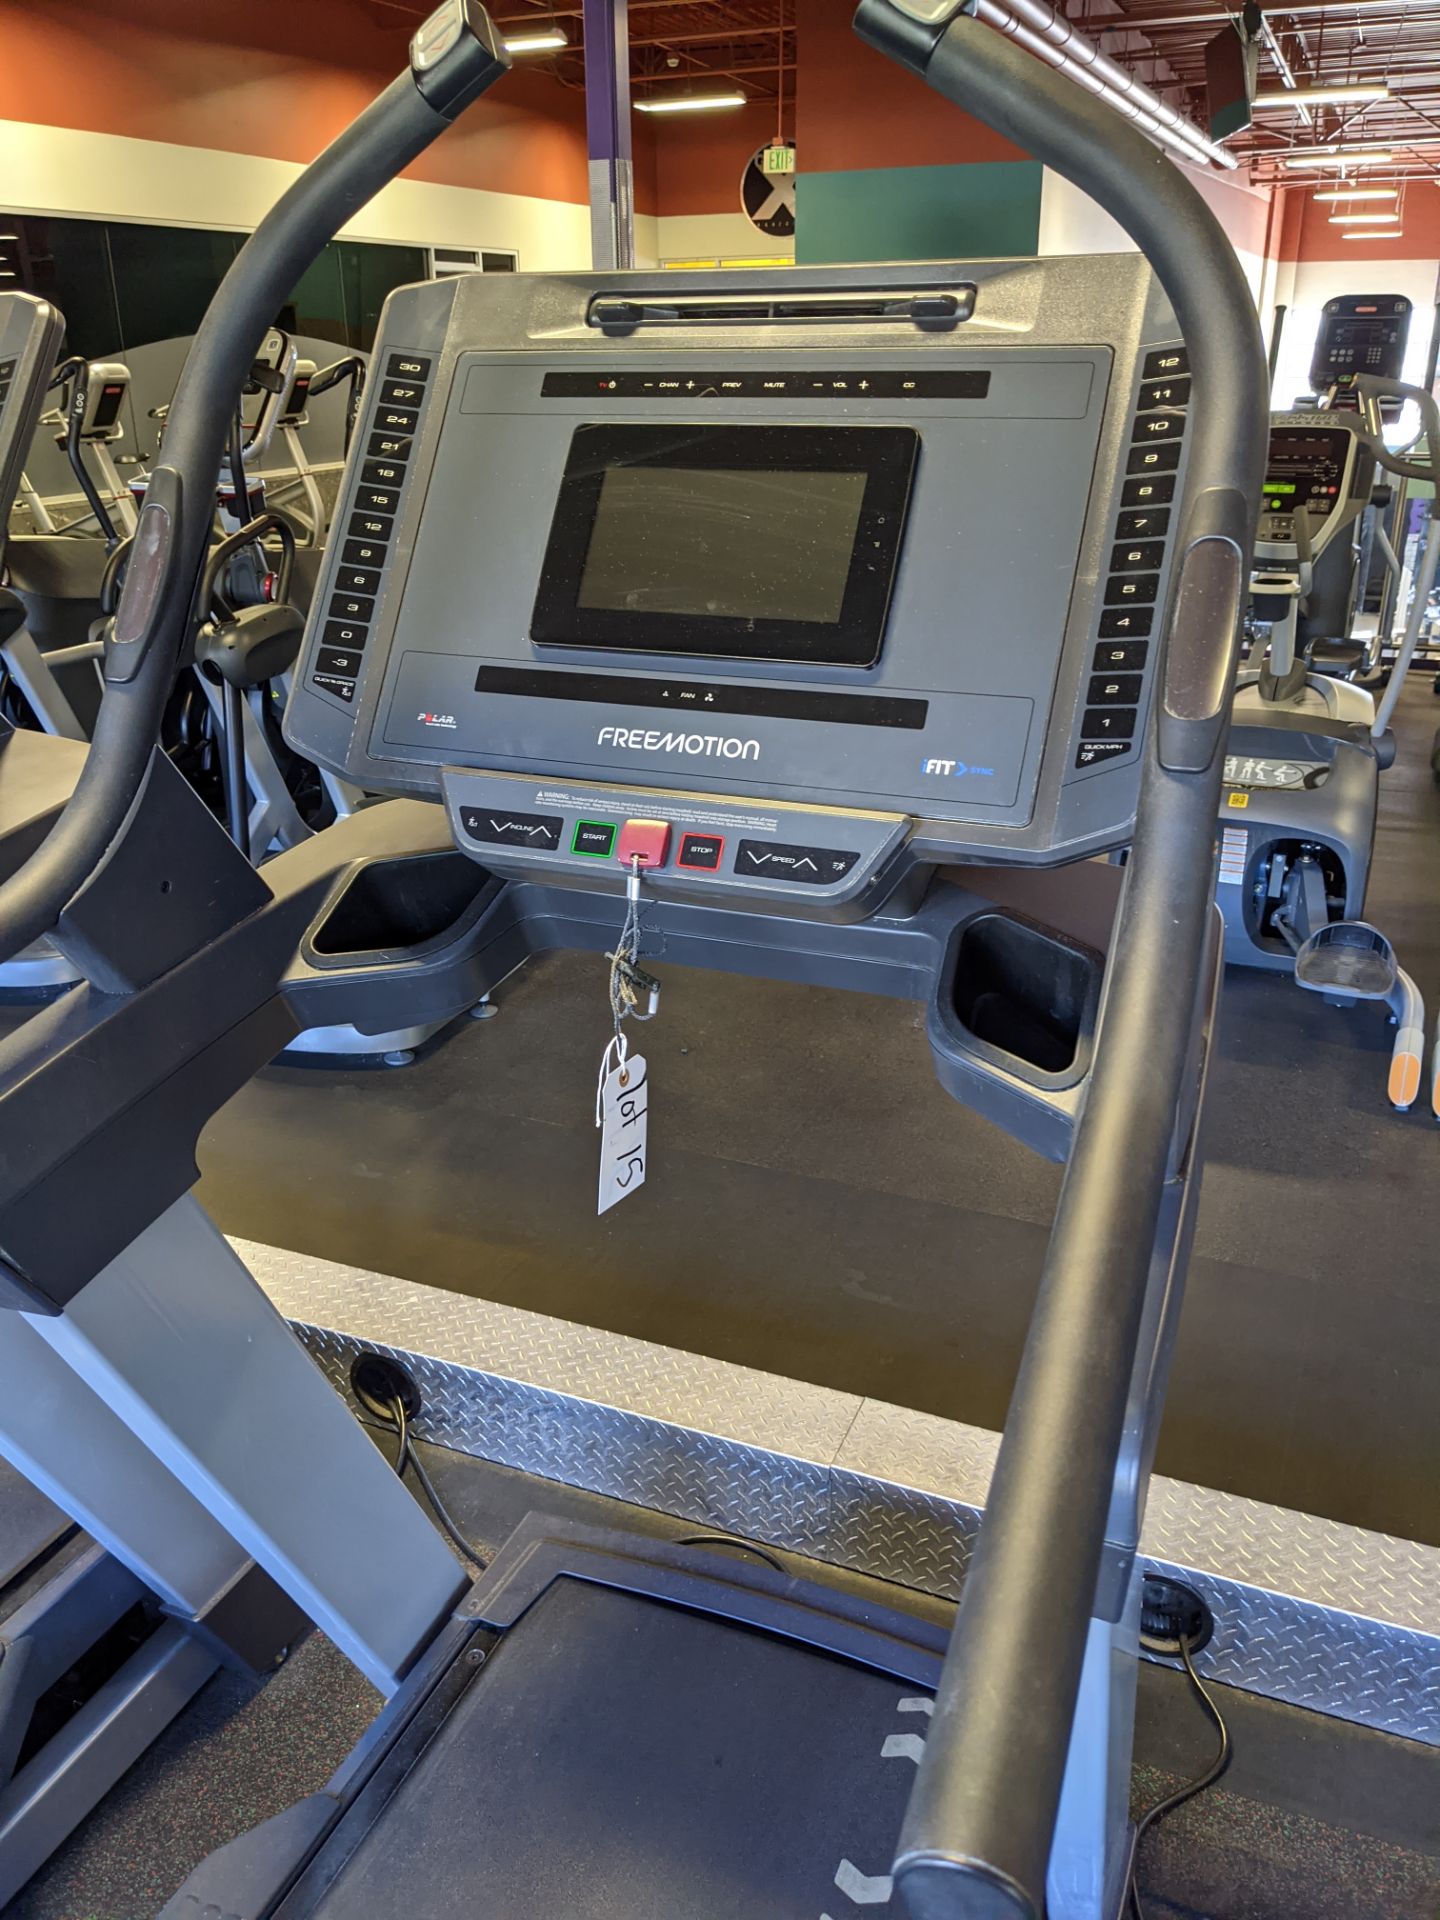 freemotion Treadmill - Image 2 of 3